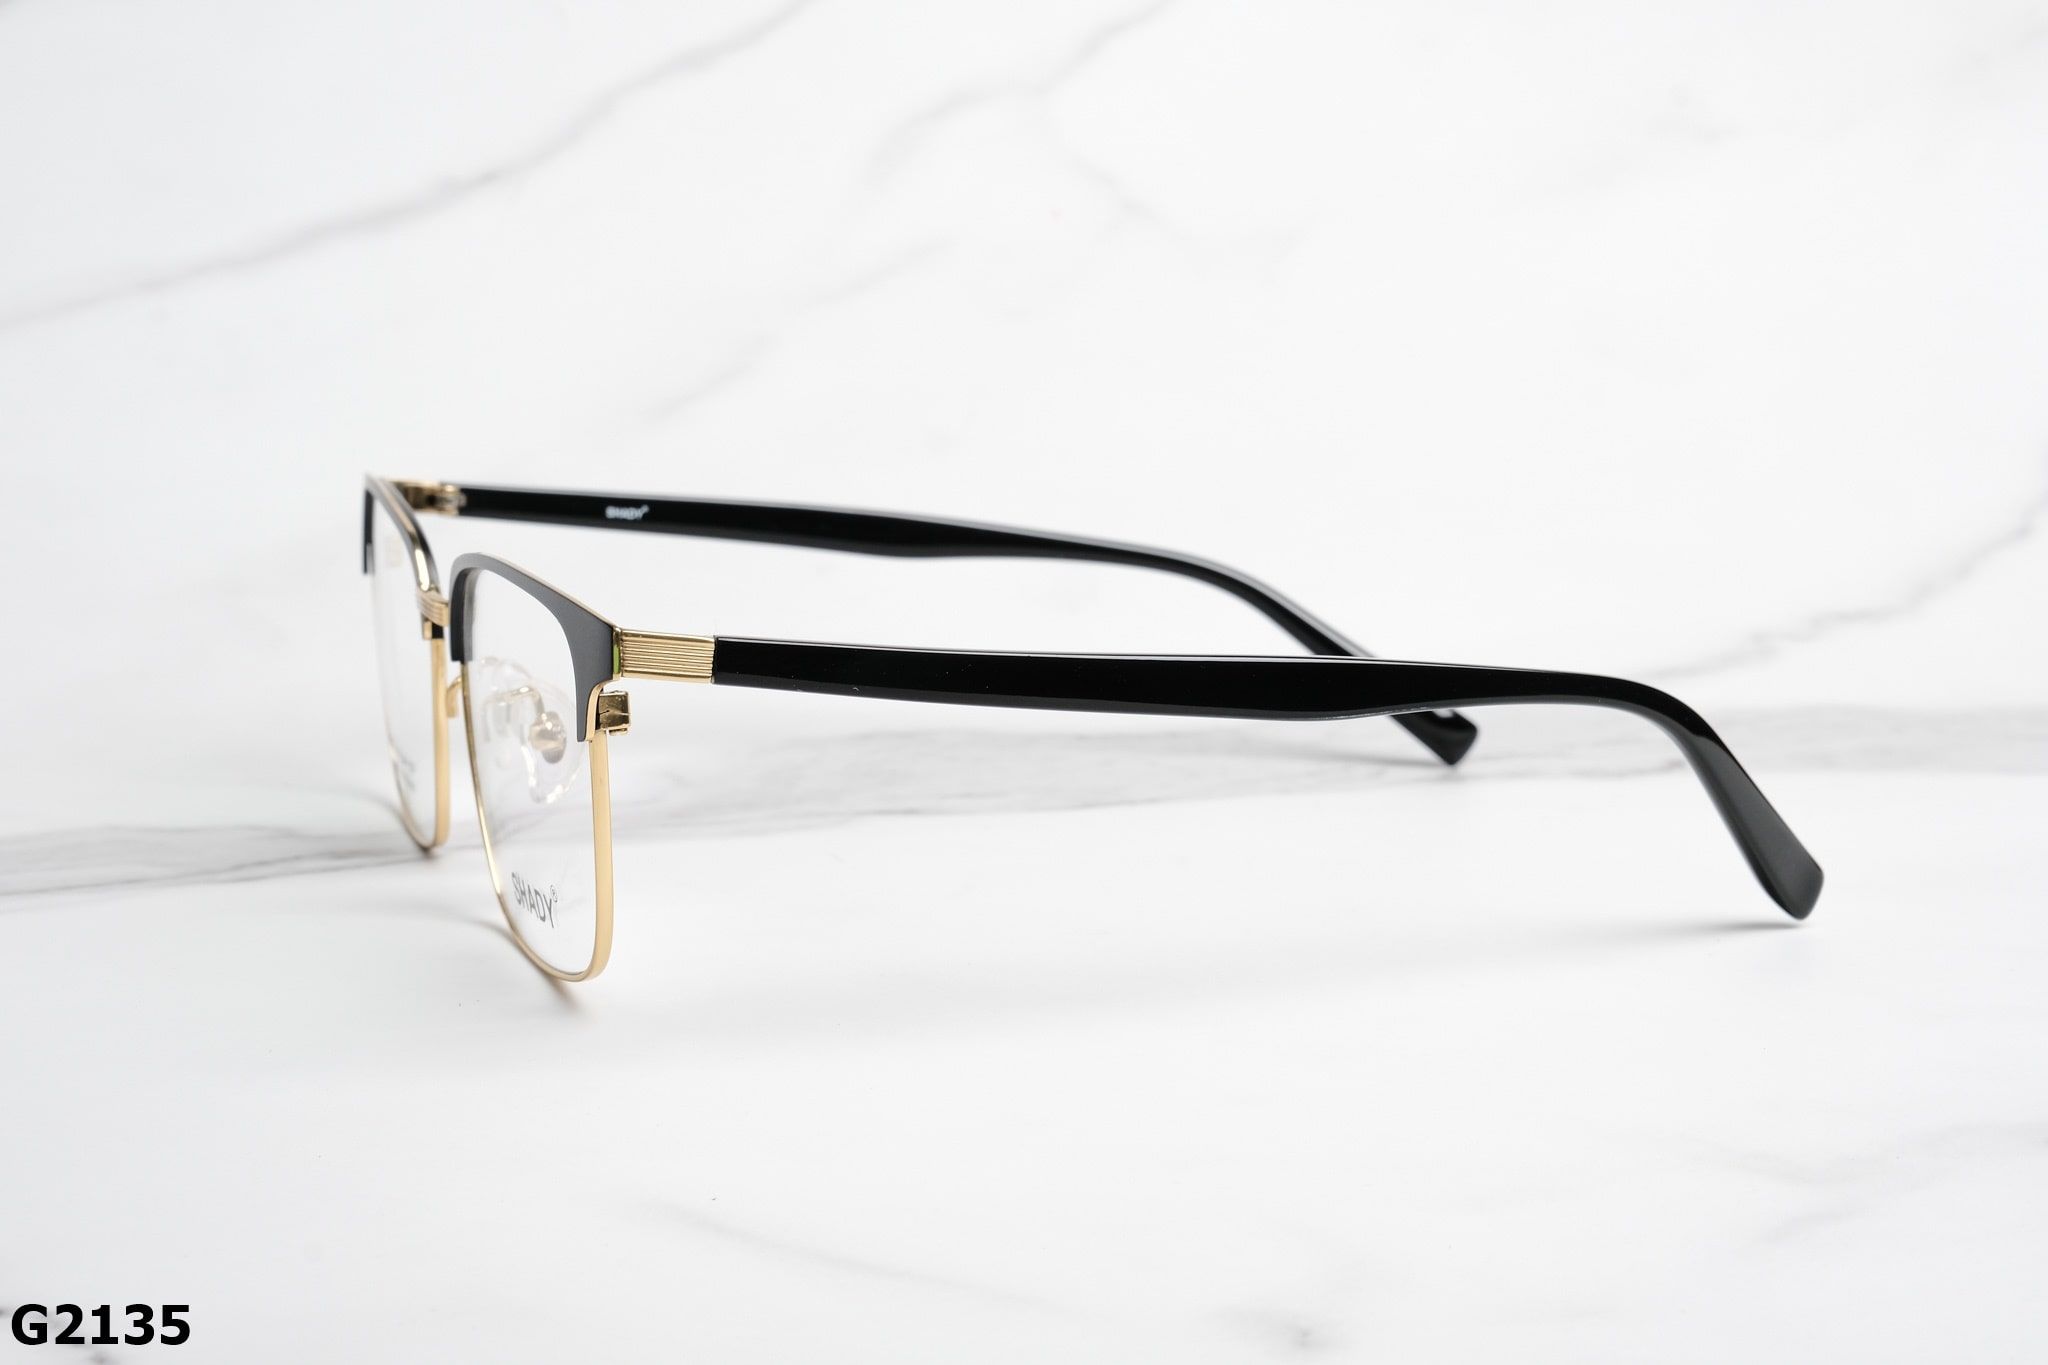  SHADY Eyewear - Glasses - G2135 